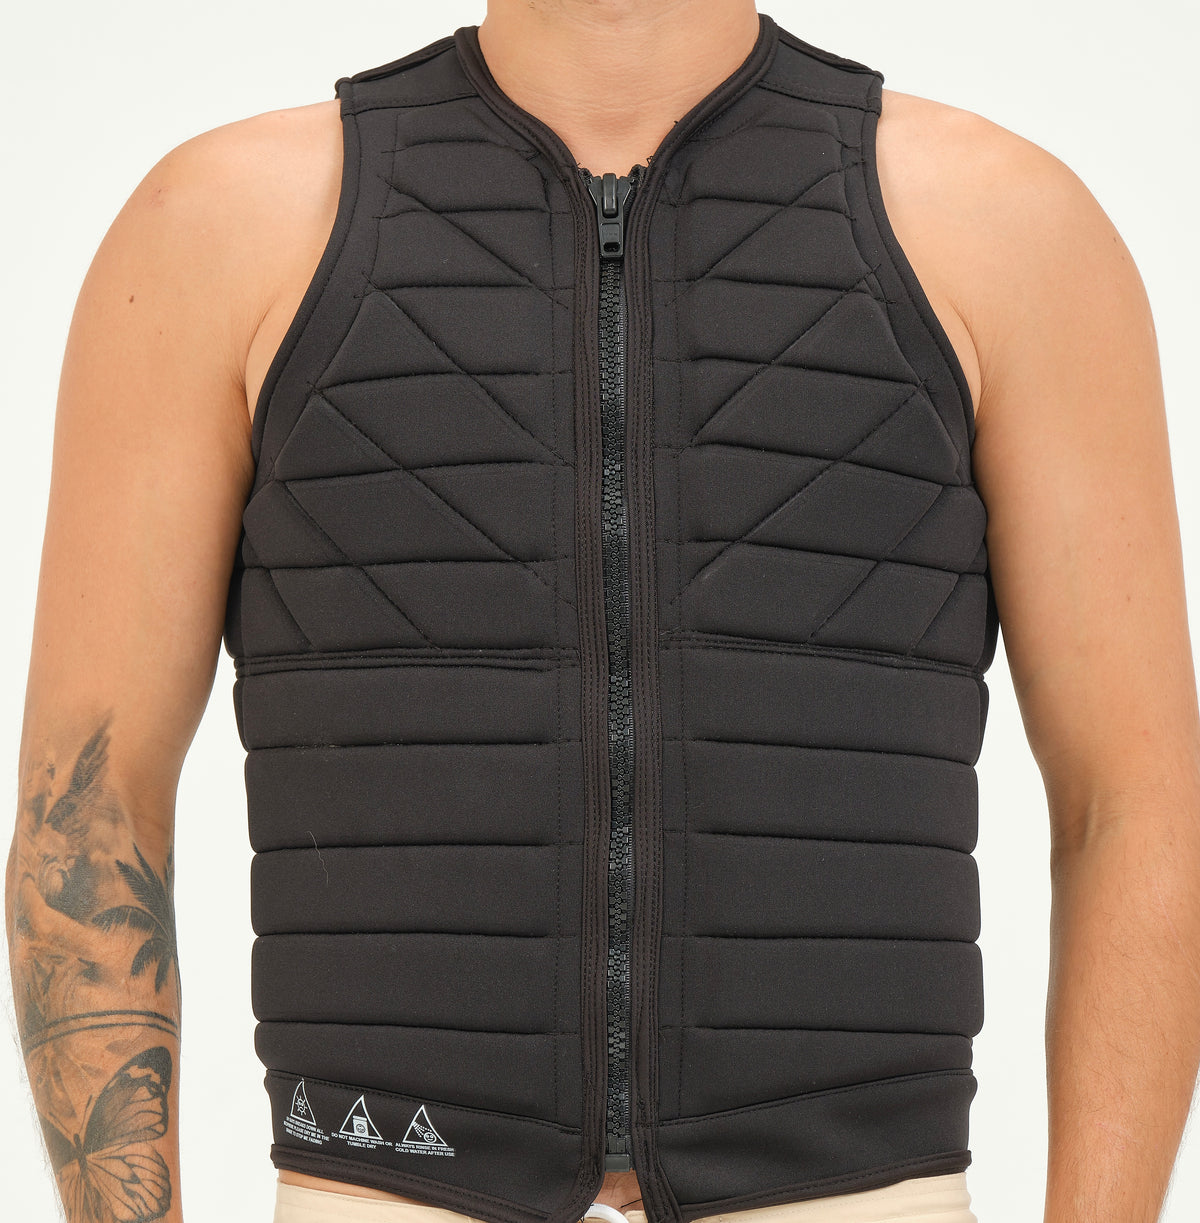 Sully Black impact vest